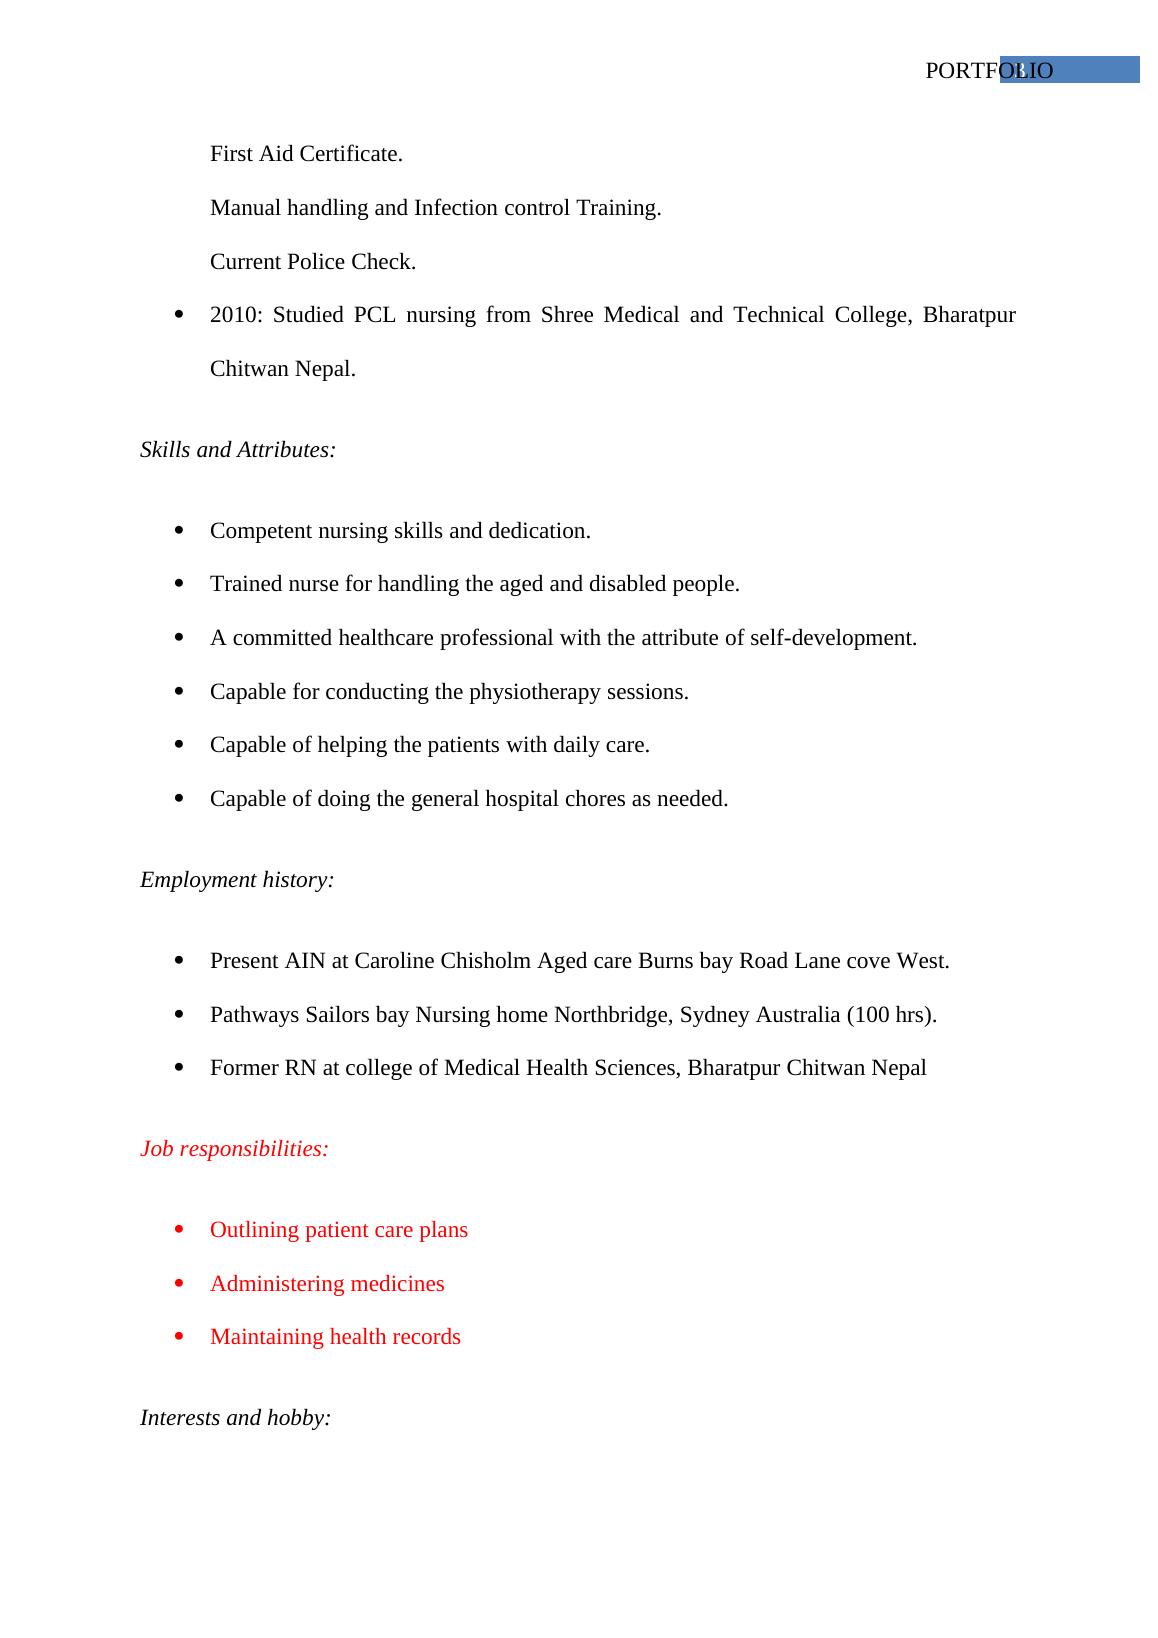 401007 Portfolio Profile of Nursing Student_3